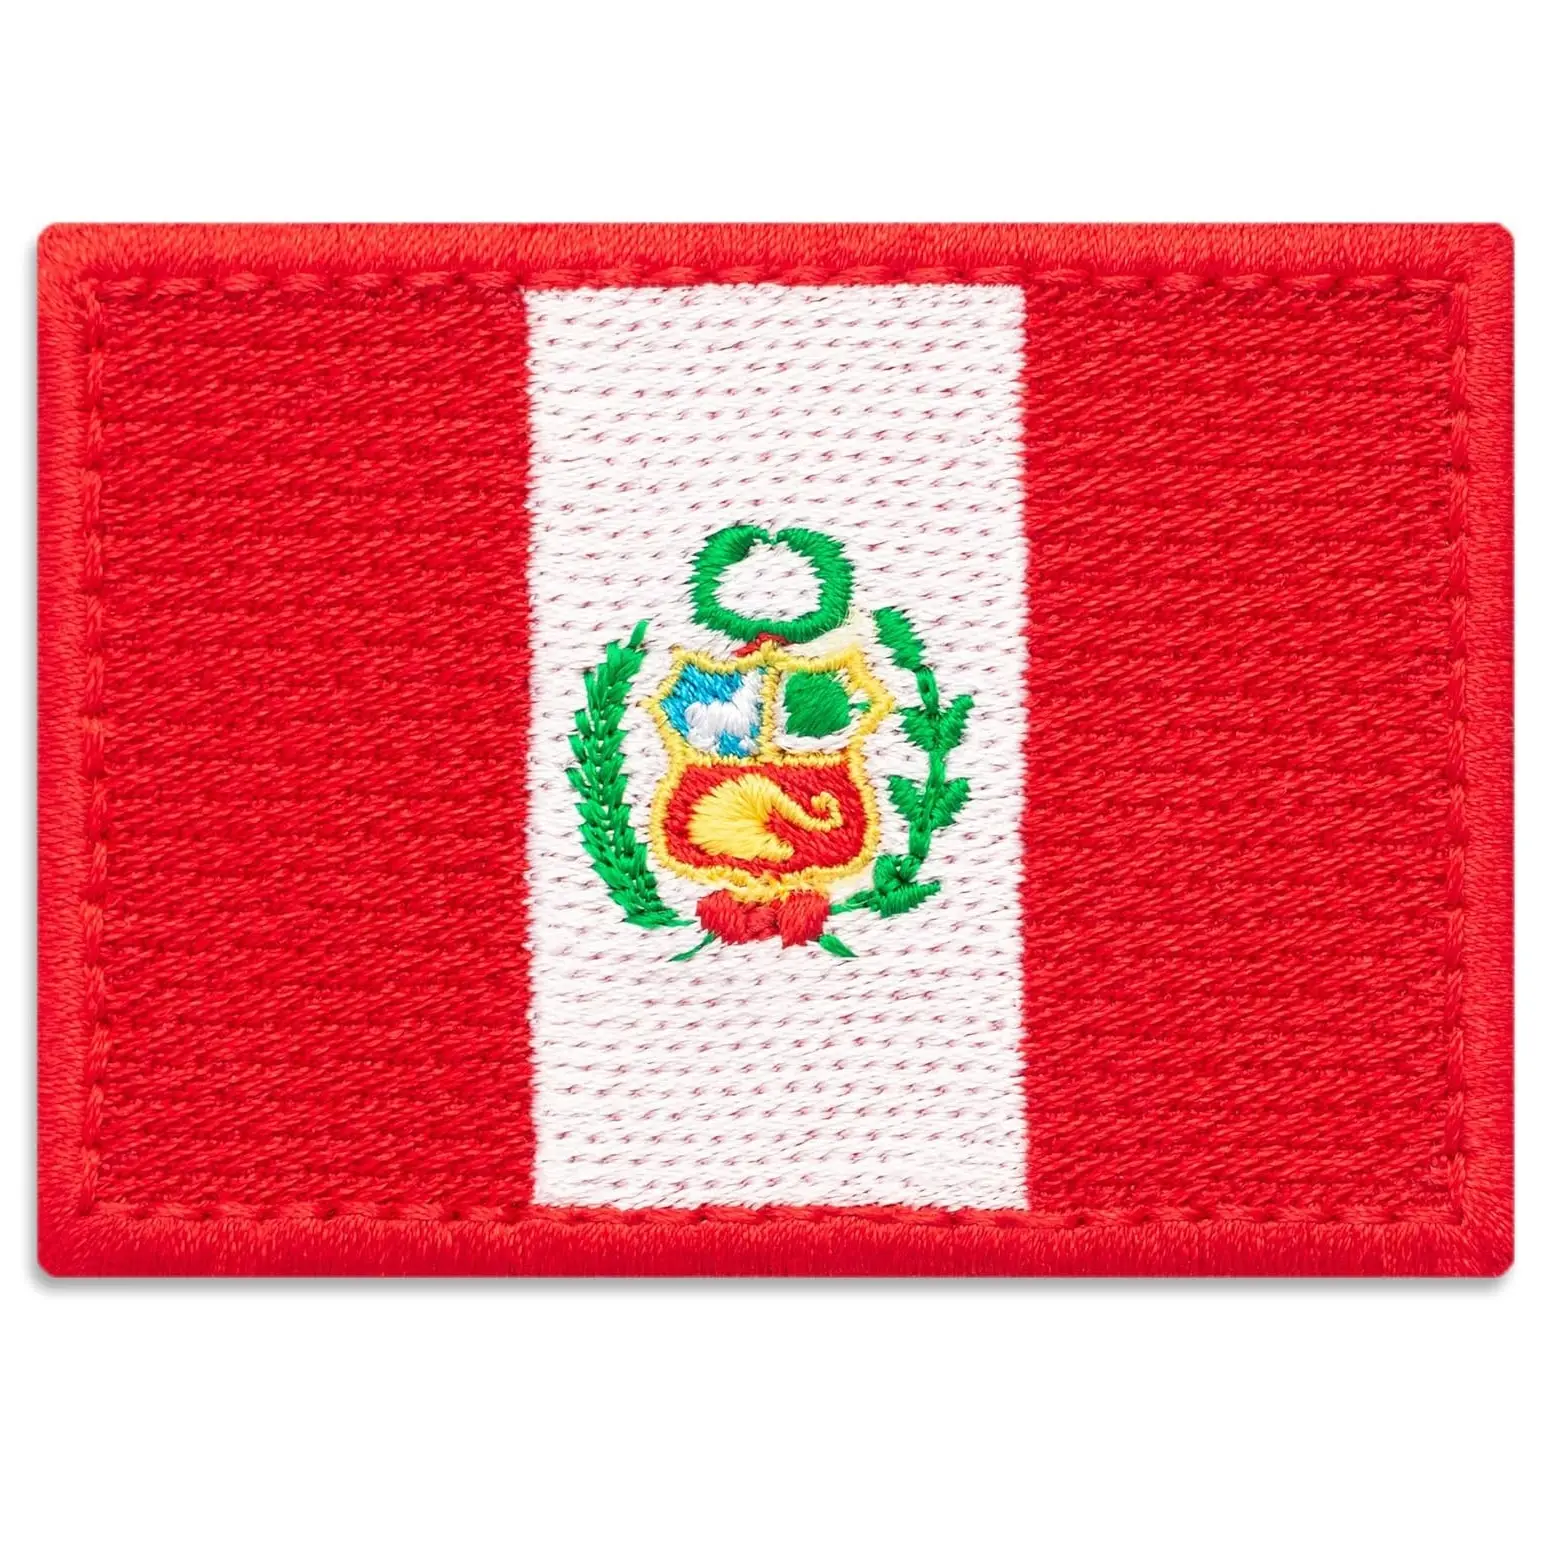 The Country Flag of Peru Patch National Emblem Embroidered Iron On, Peru Country Flag Embroidered Blazer Badge Patch